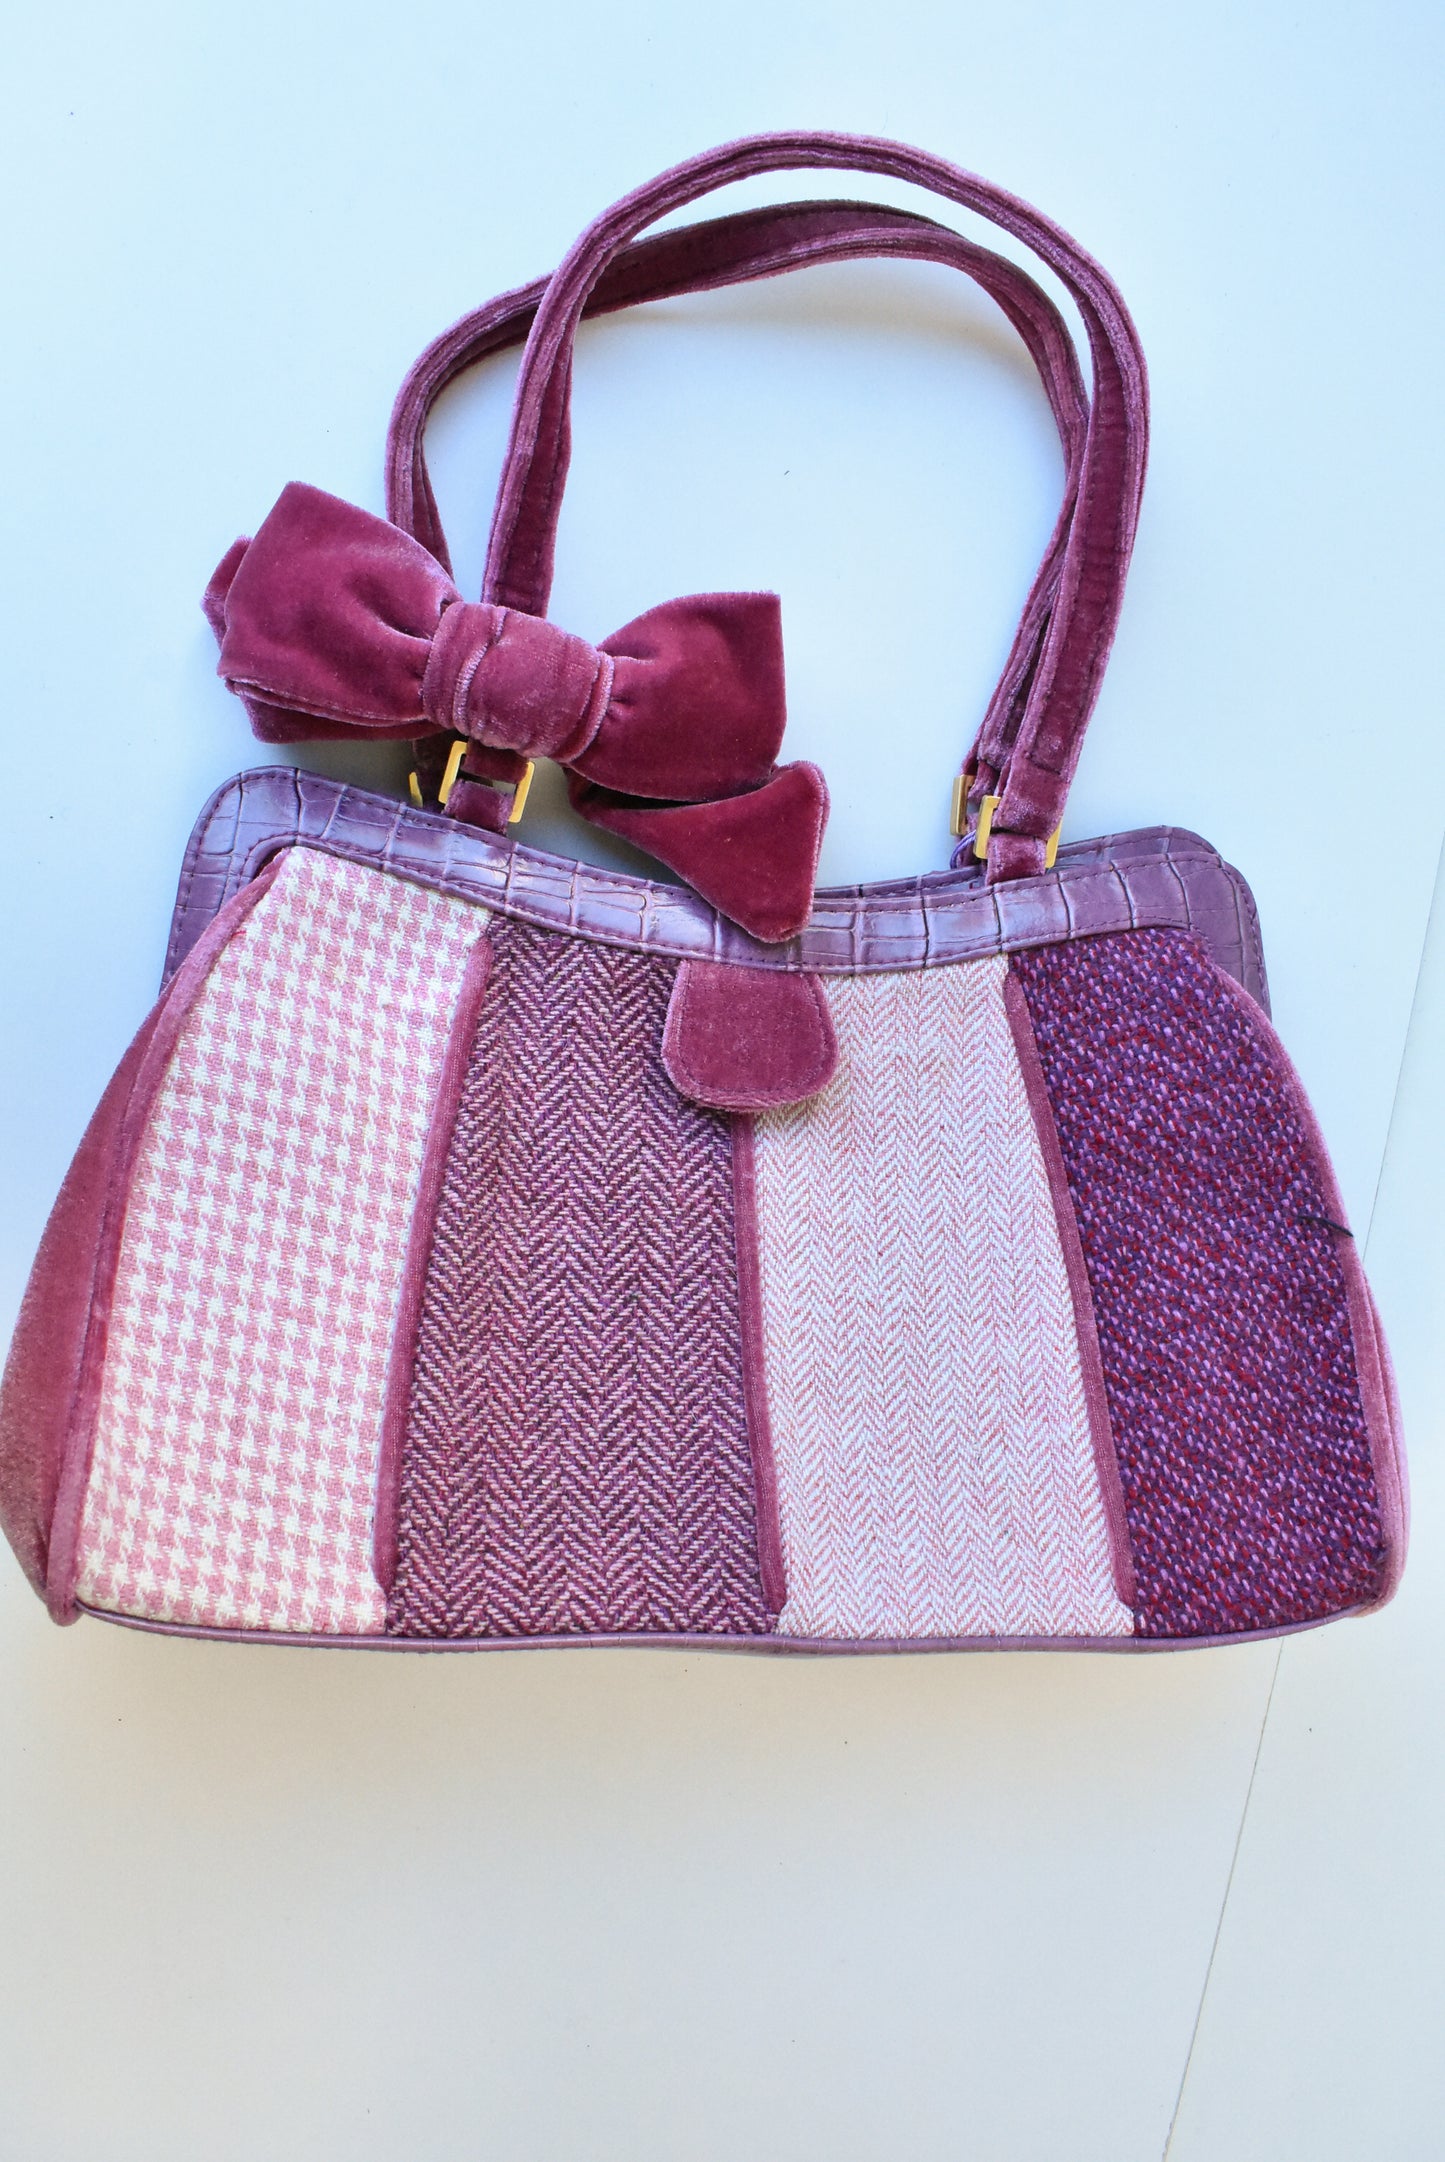 Xcessori, gorgeous pink handbag